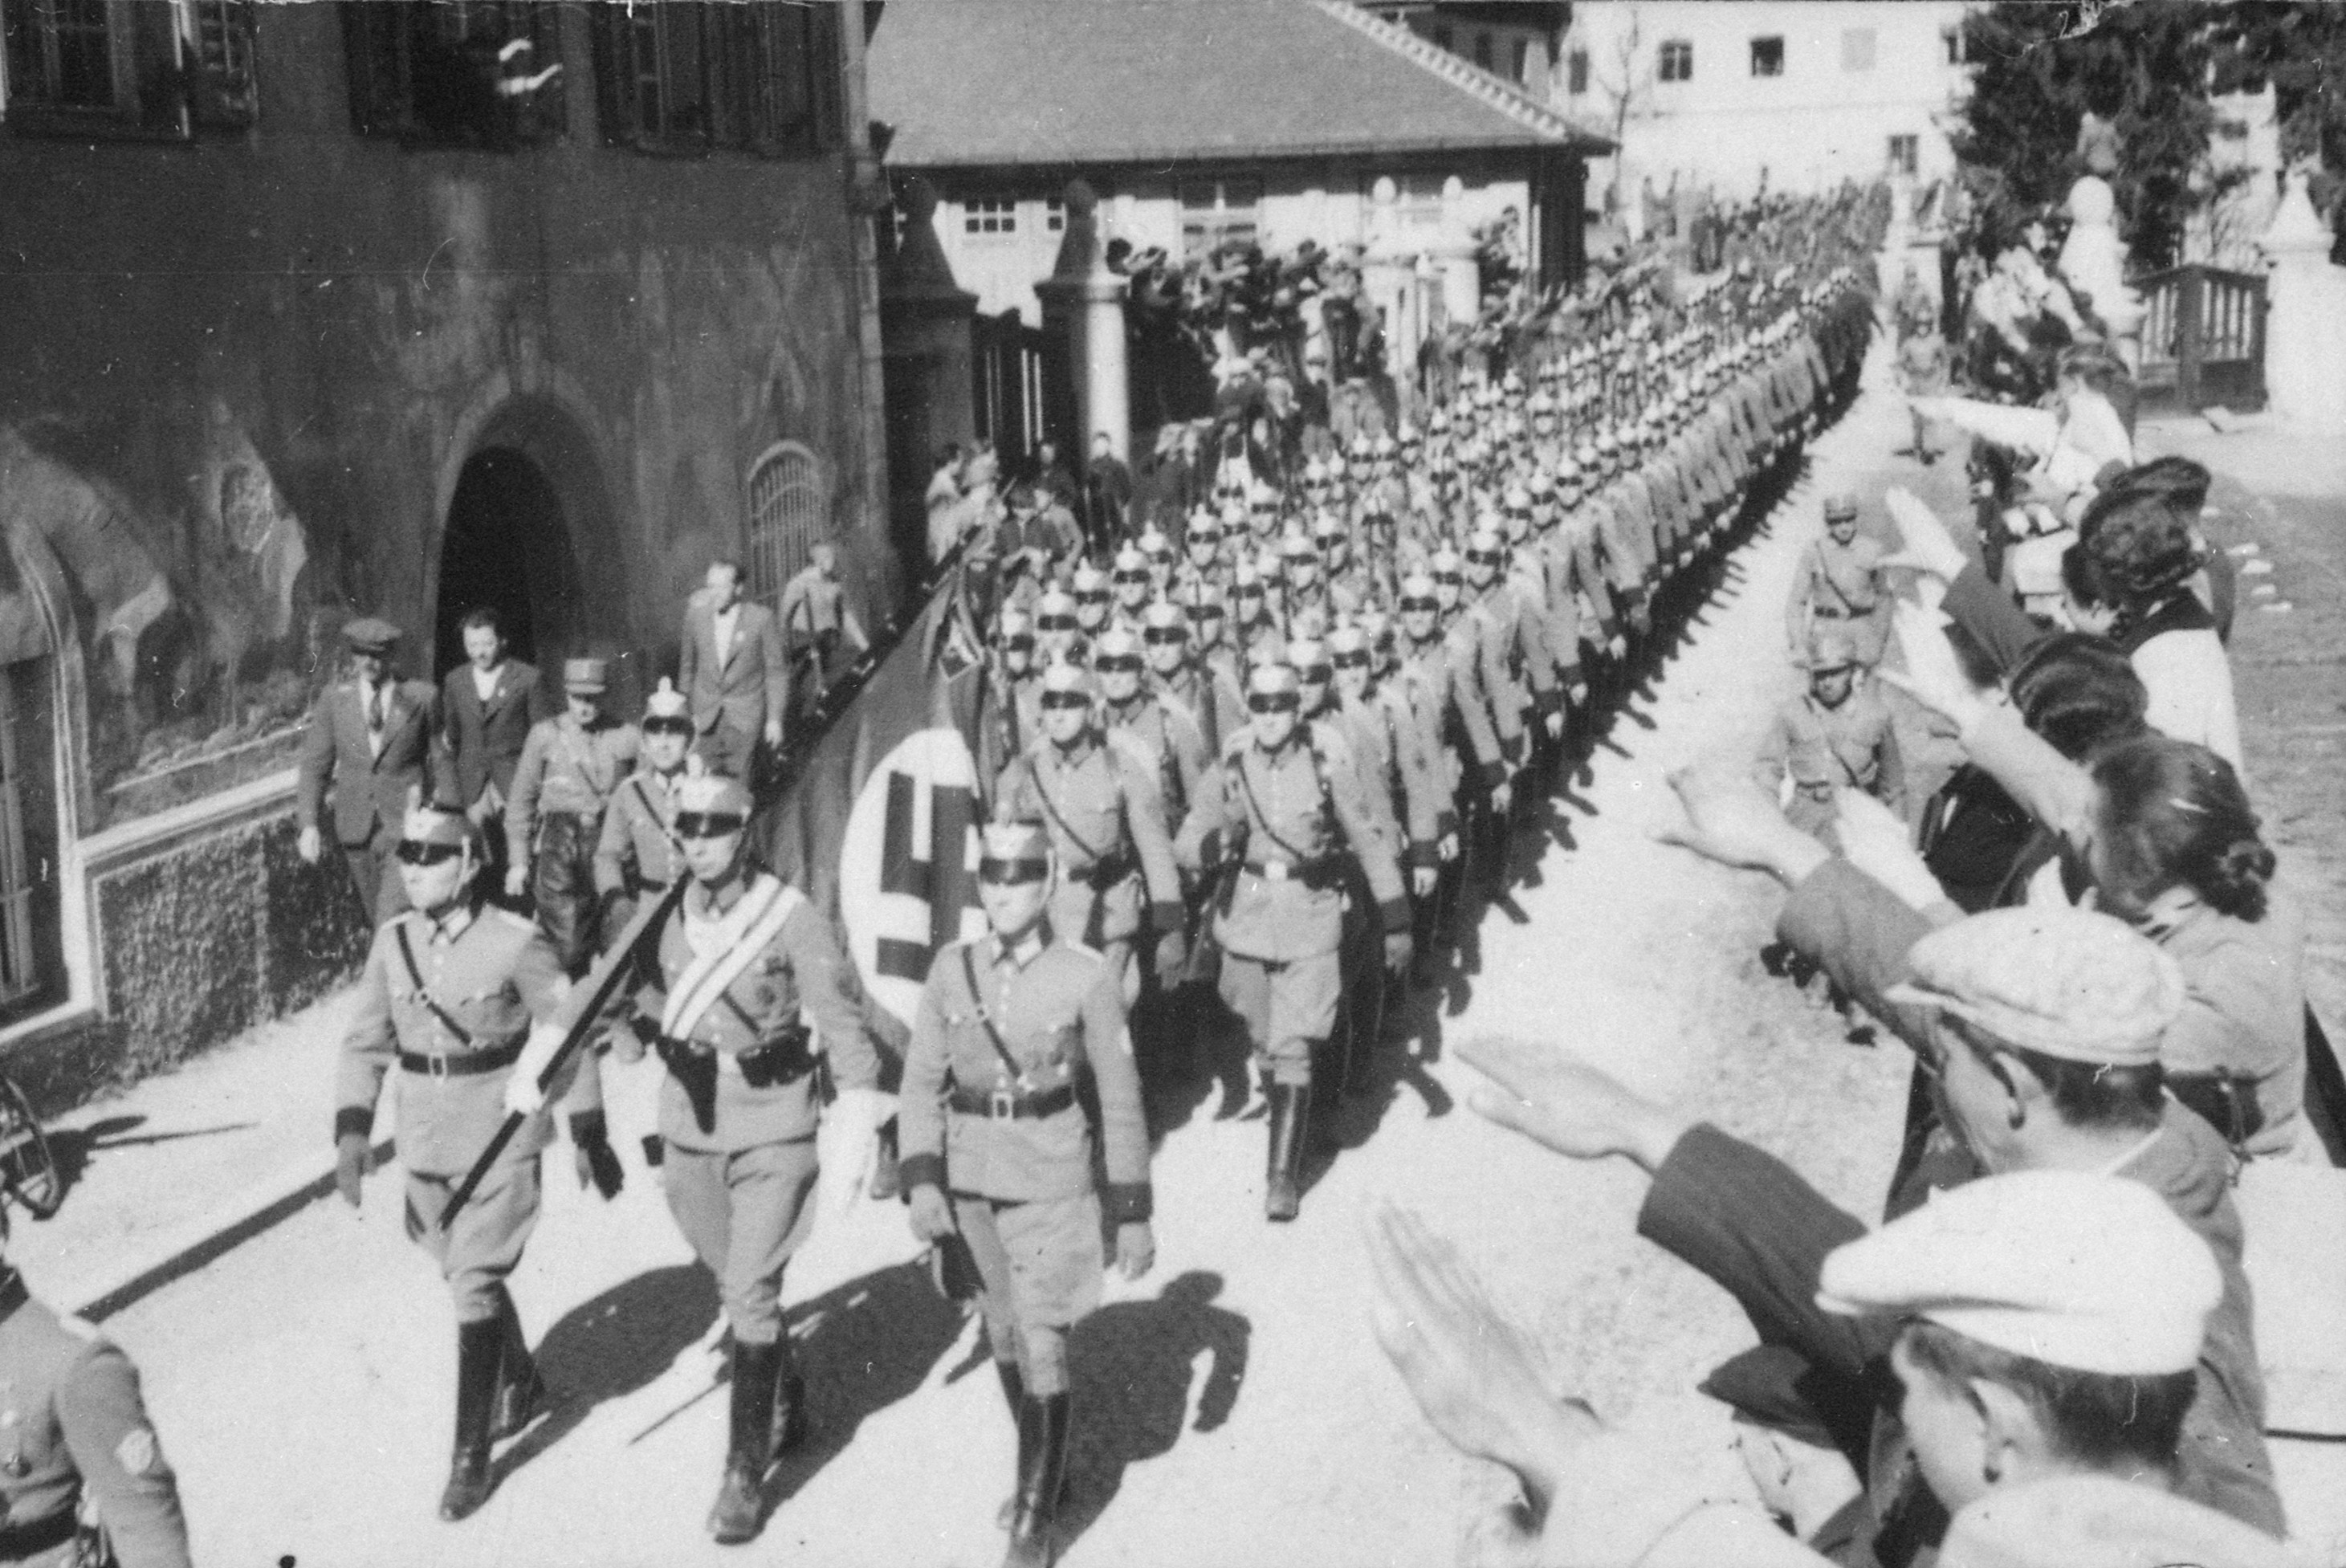 German troops marching into Austria, 12 Mar 1938